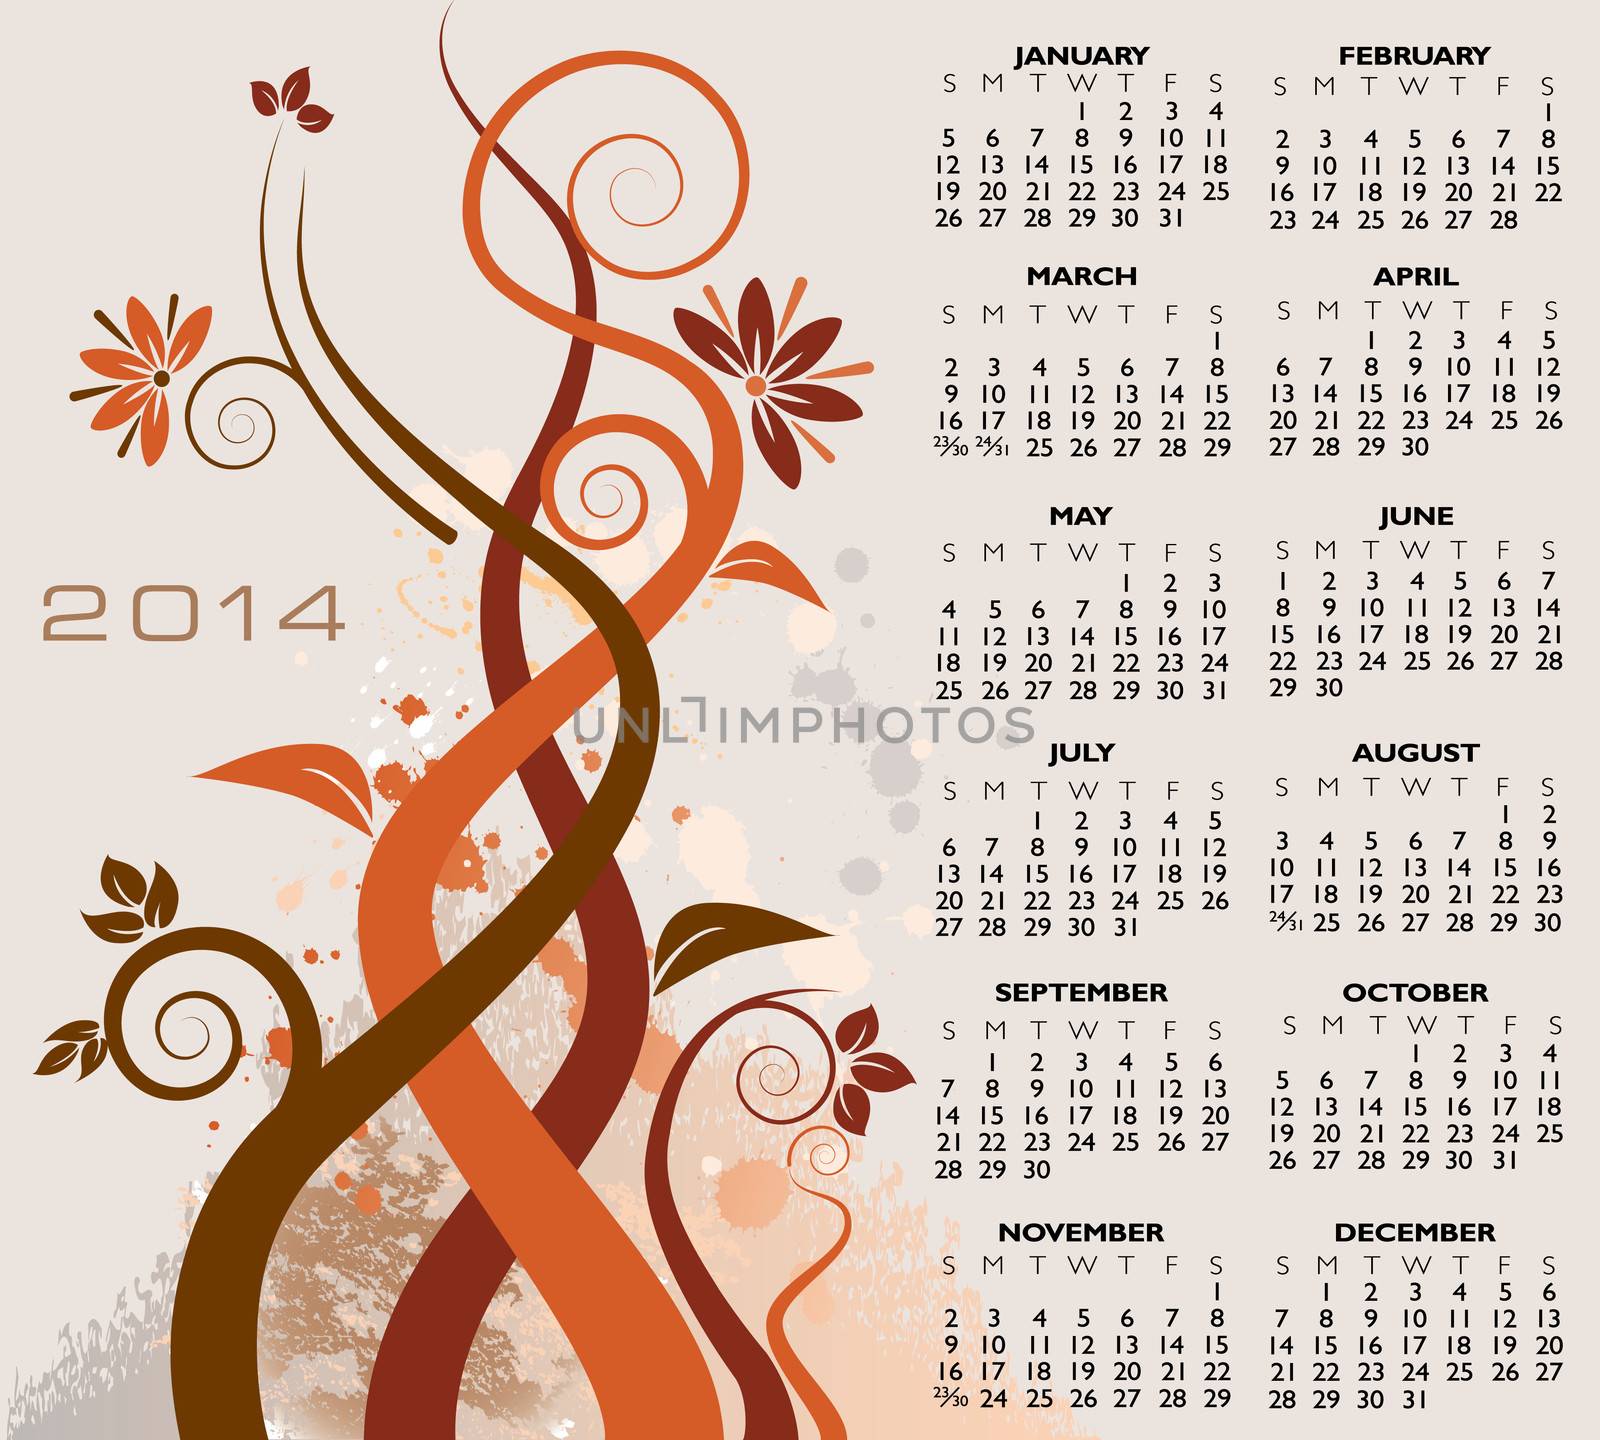 2014 Creative Floral Calendar for Print or Website